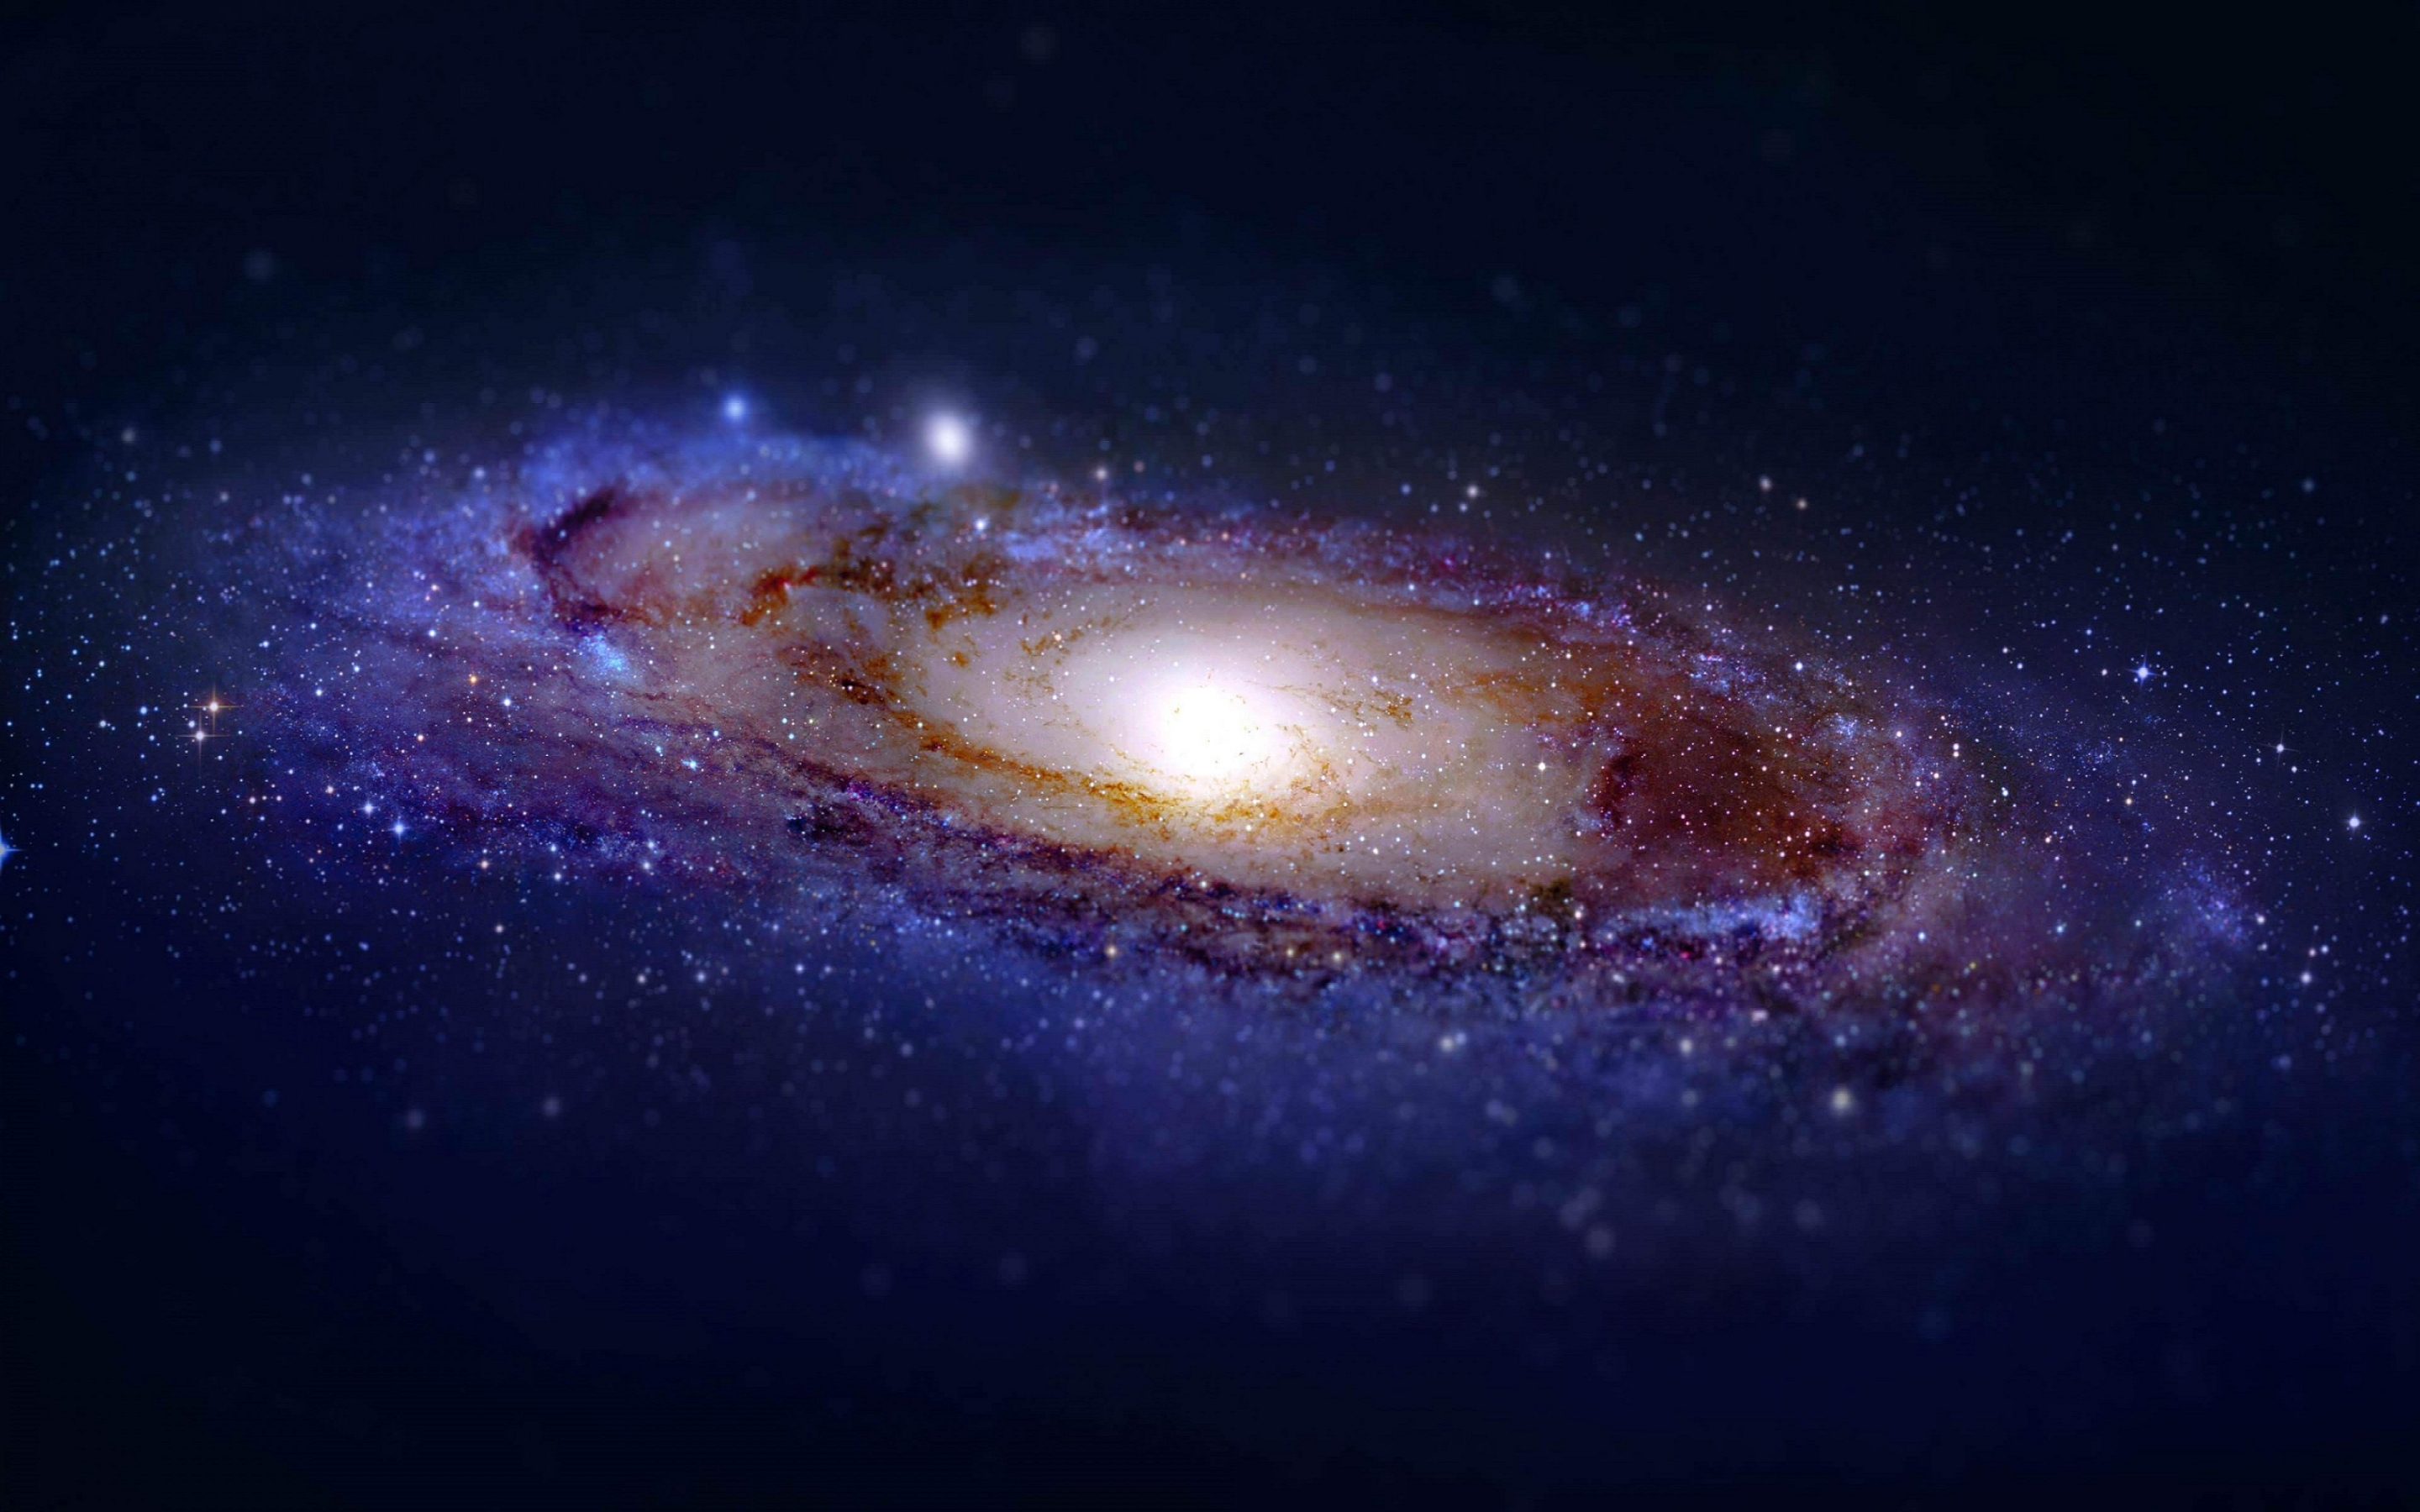 Andromeda Galaxy for 2880 x 1800 Retina Display resolution